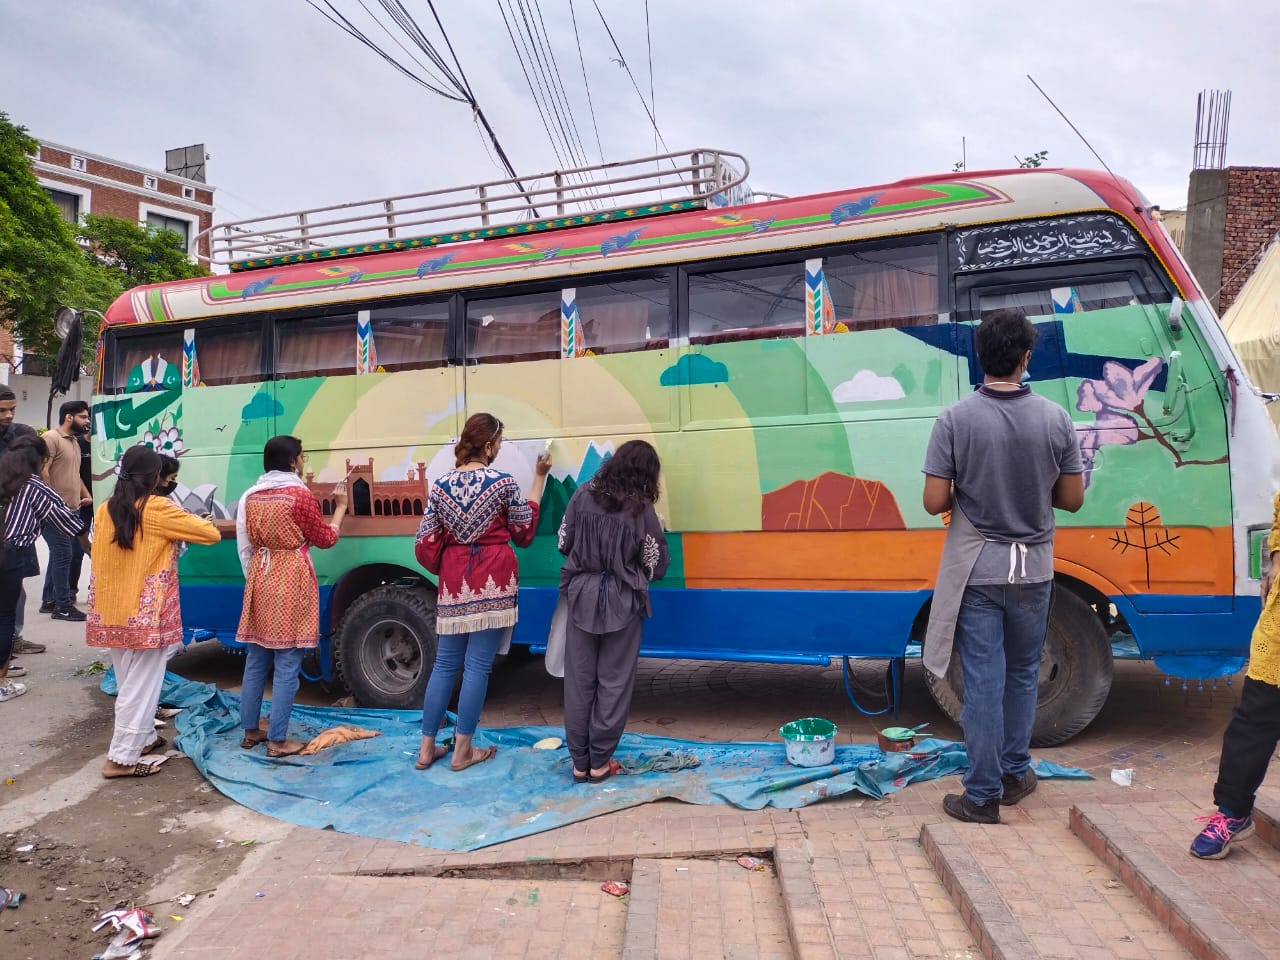 Public buses showcasing artworks with Australian and Pakistani images, by Pakistani-Australian artists.